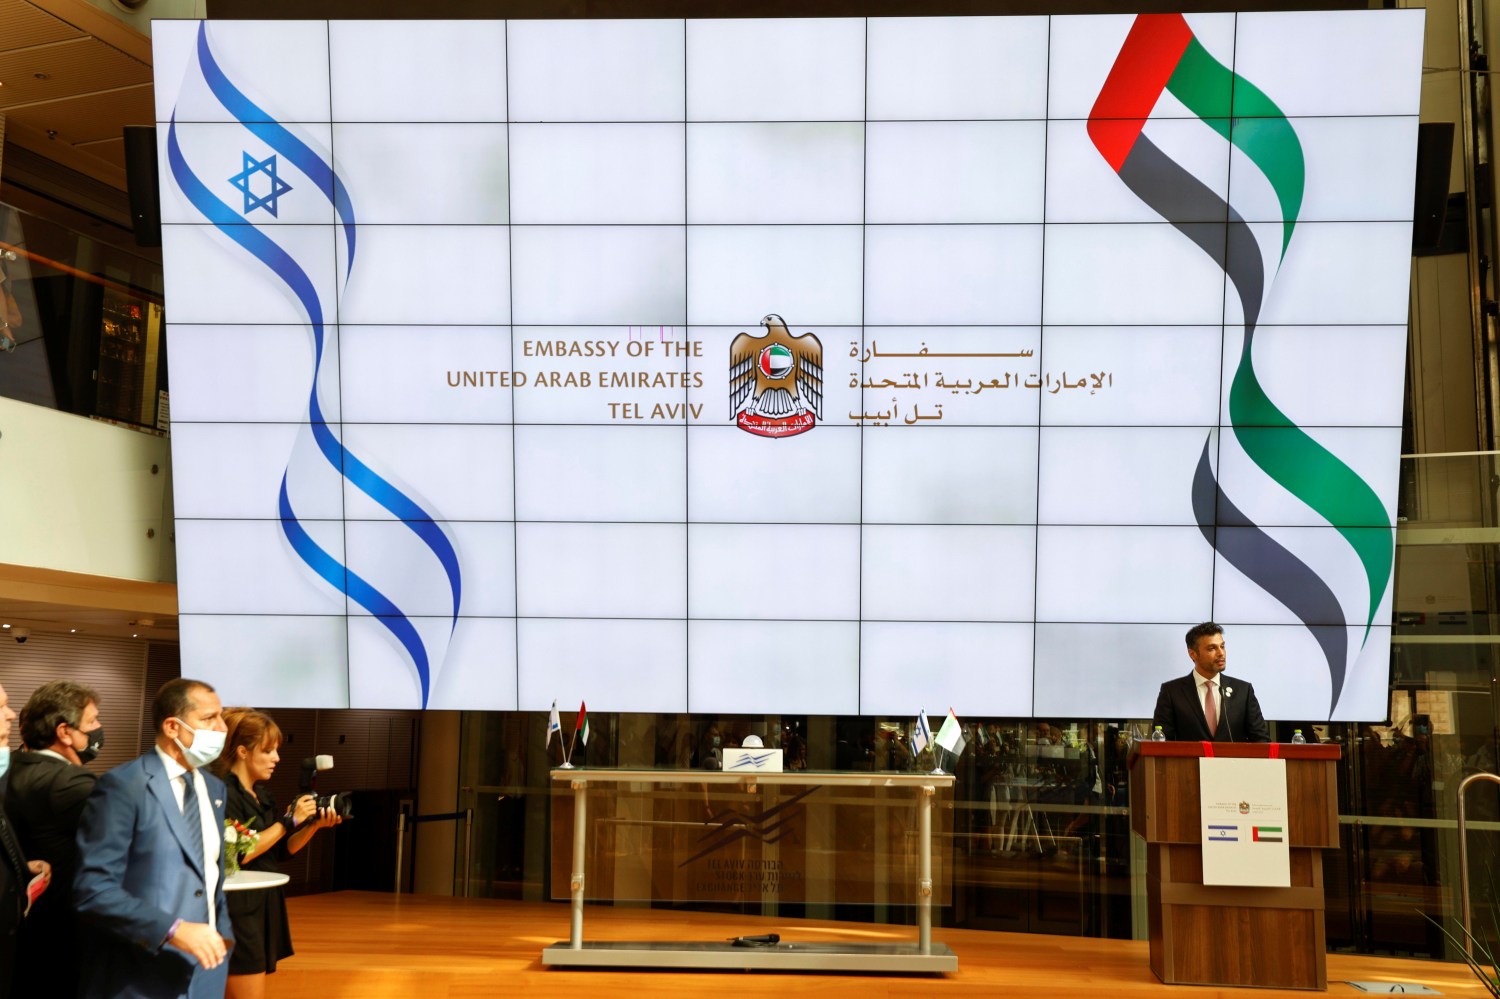 UAE Ambassador to Israel, Mohamed Al Khaja, speaks during the opening ceremony of the Emirati embassy in Tel Aviv, Israel July 14, 2021. REUTERS/Amir Cohen